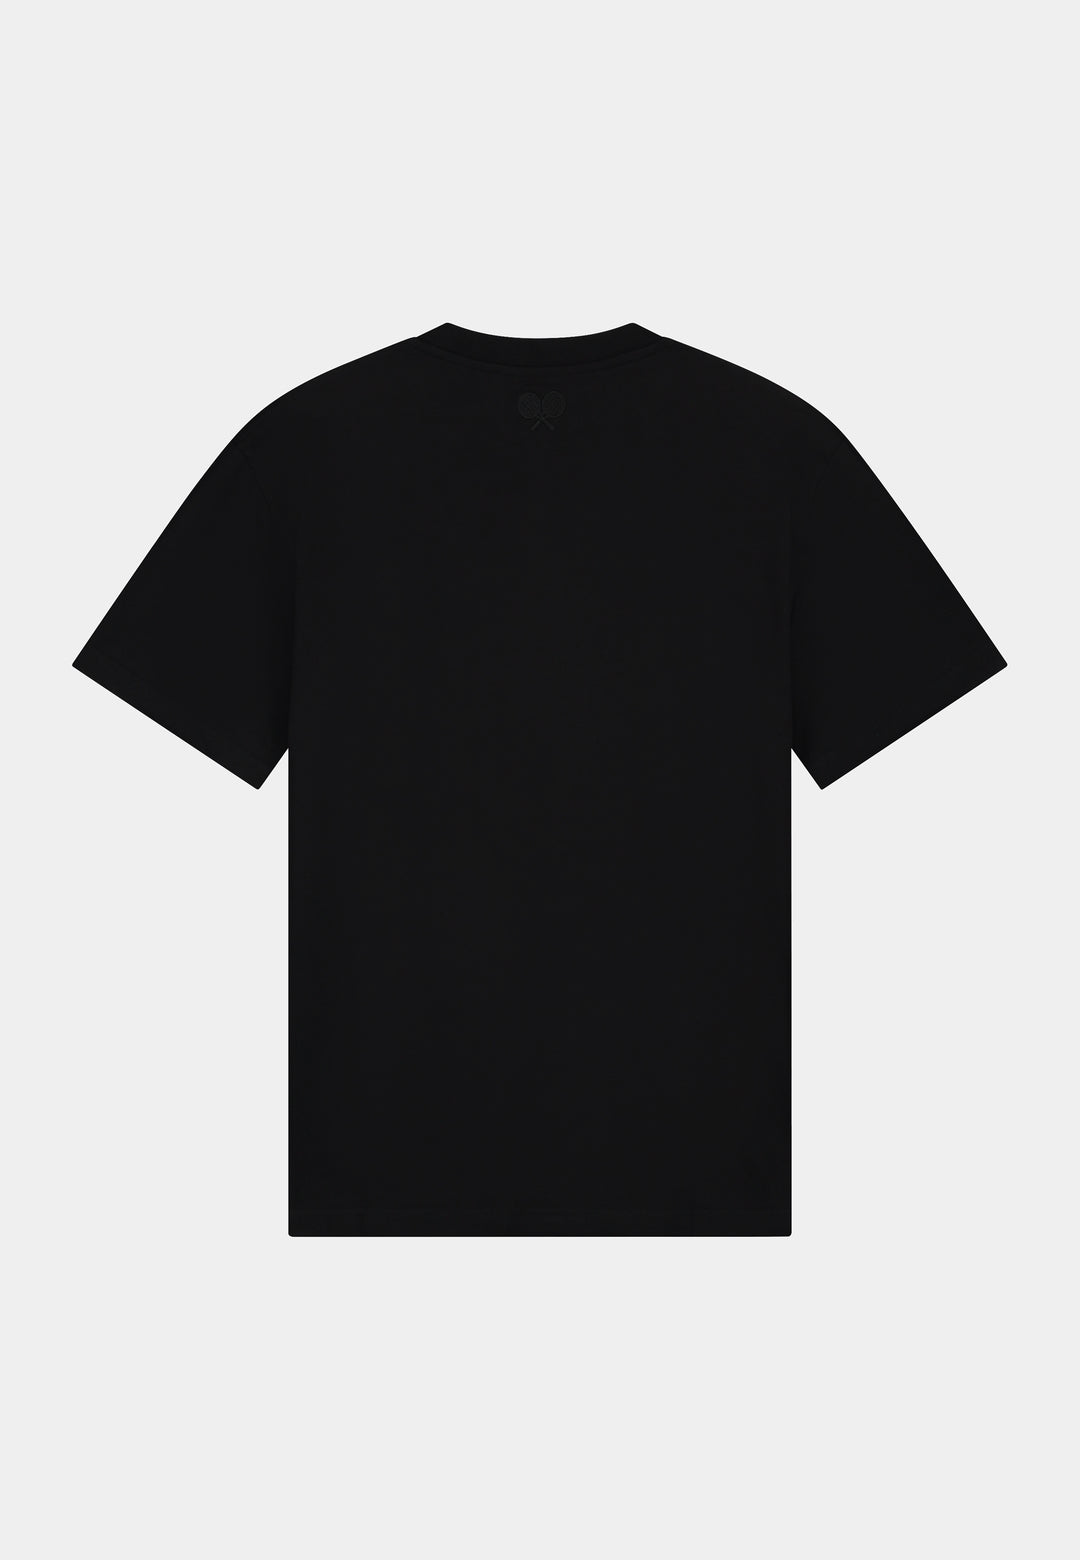 LP Statement T-Shirt Black